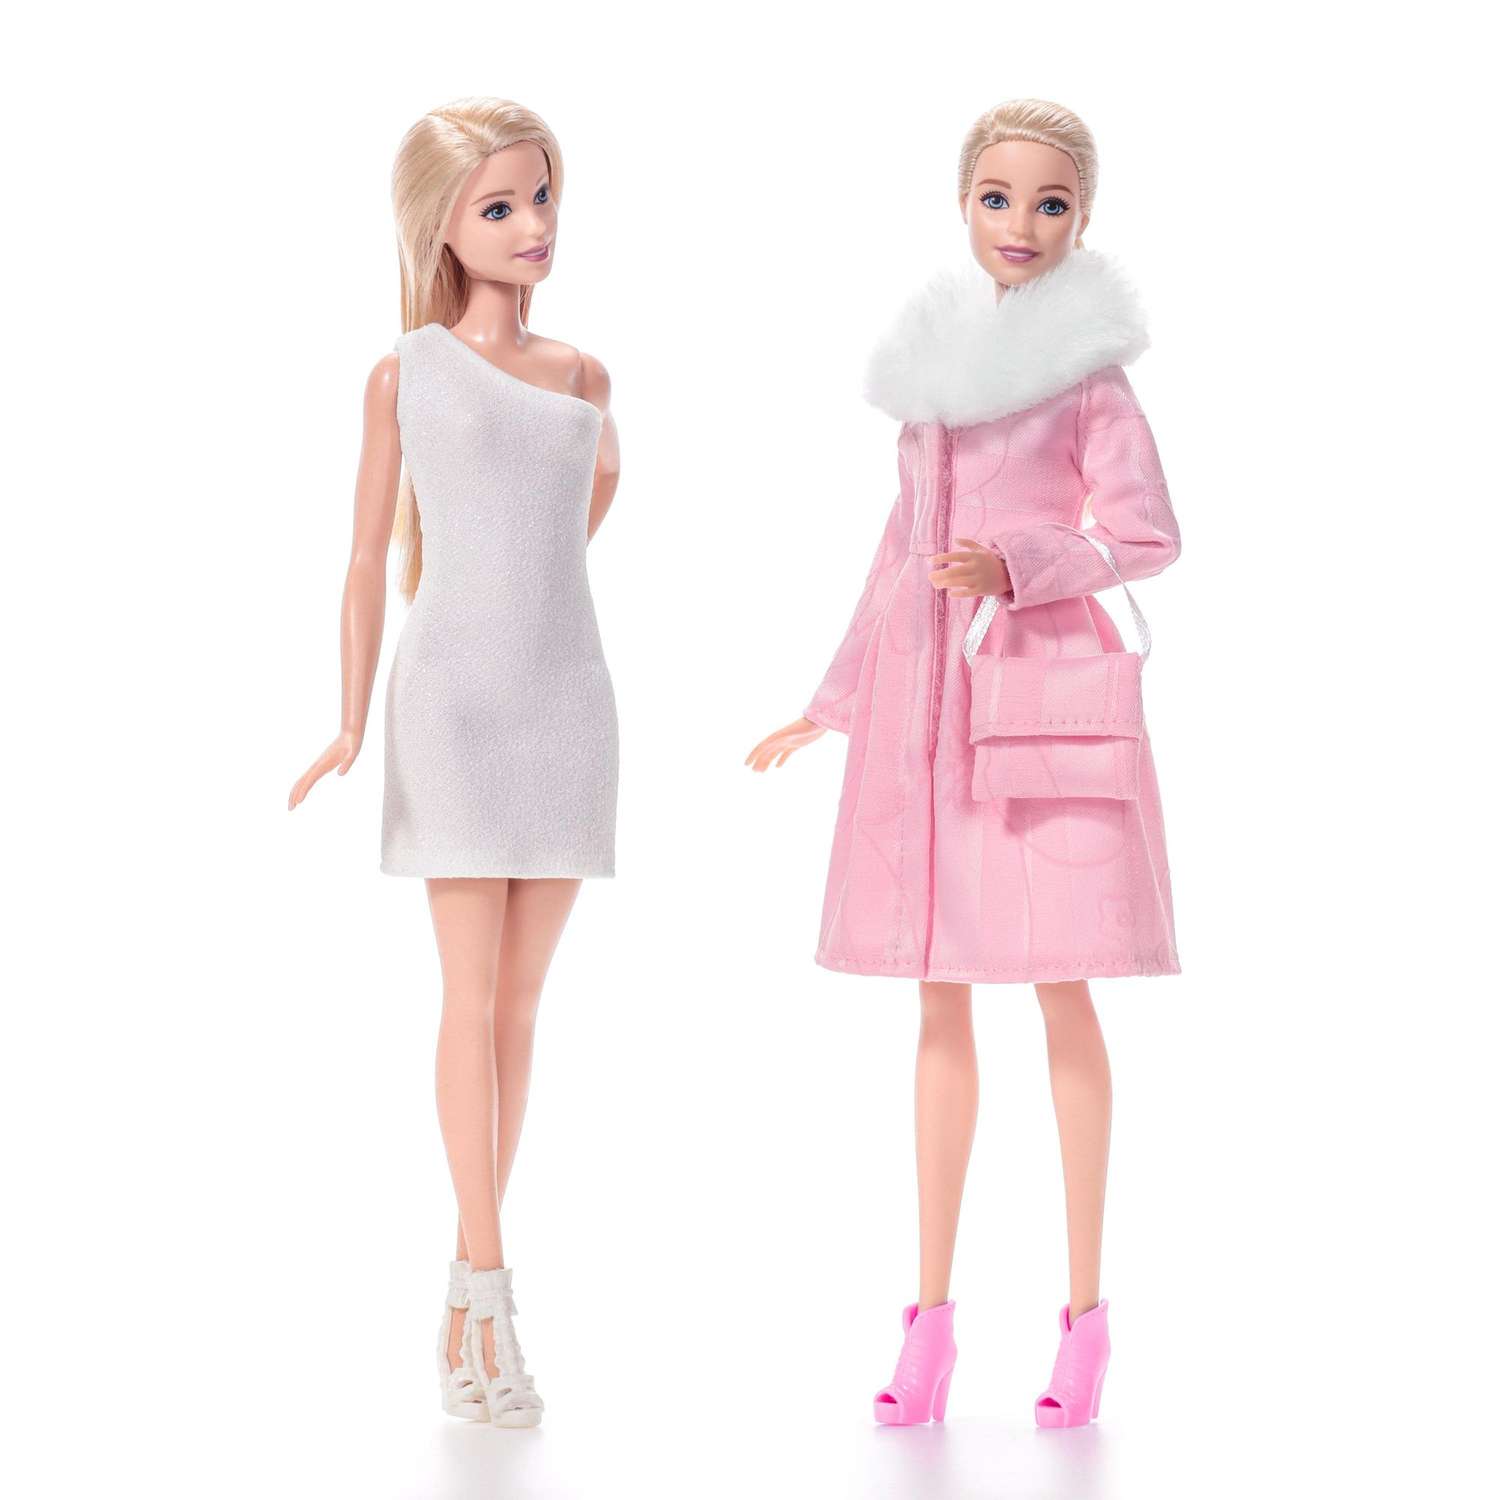 Одежда для кукол VIANA типа Барби 125.07.2 малиновый/белый 1257.2 - фото 2